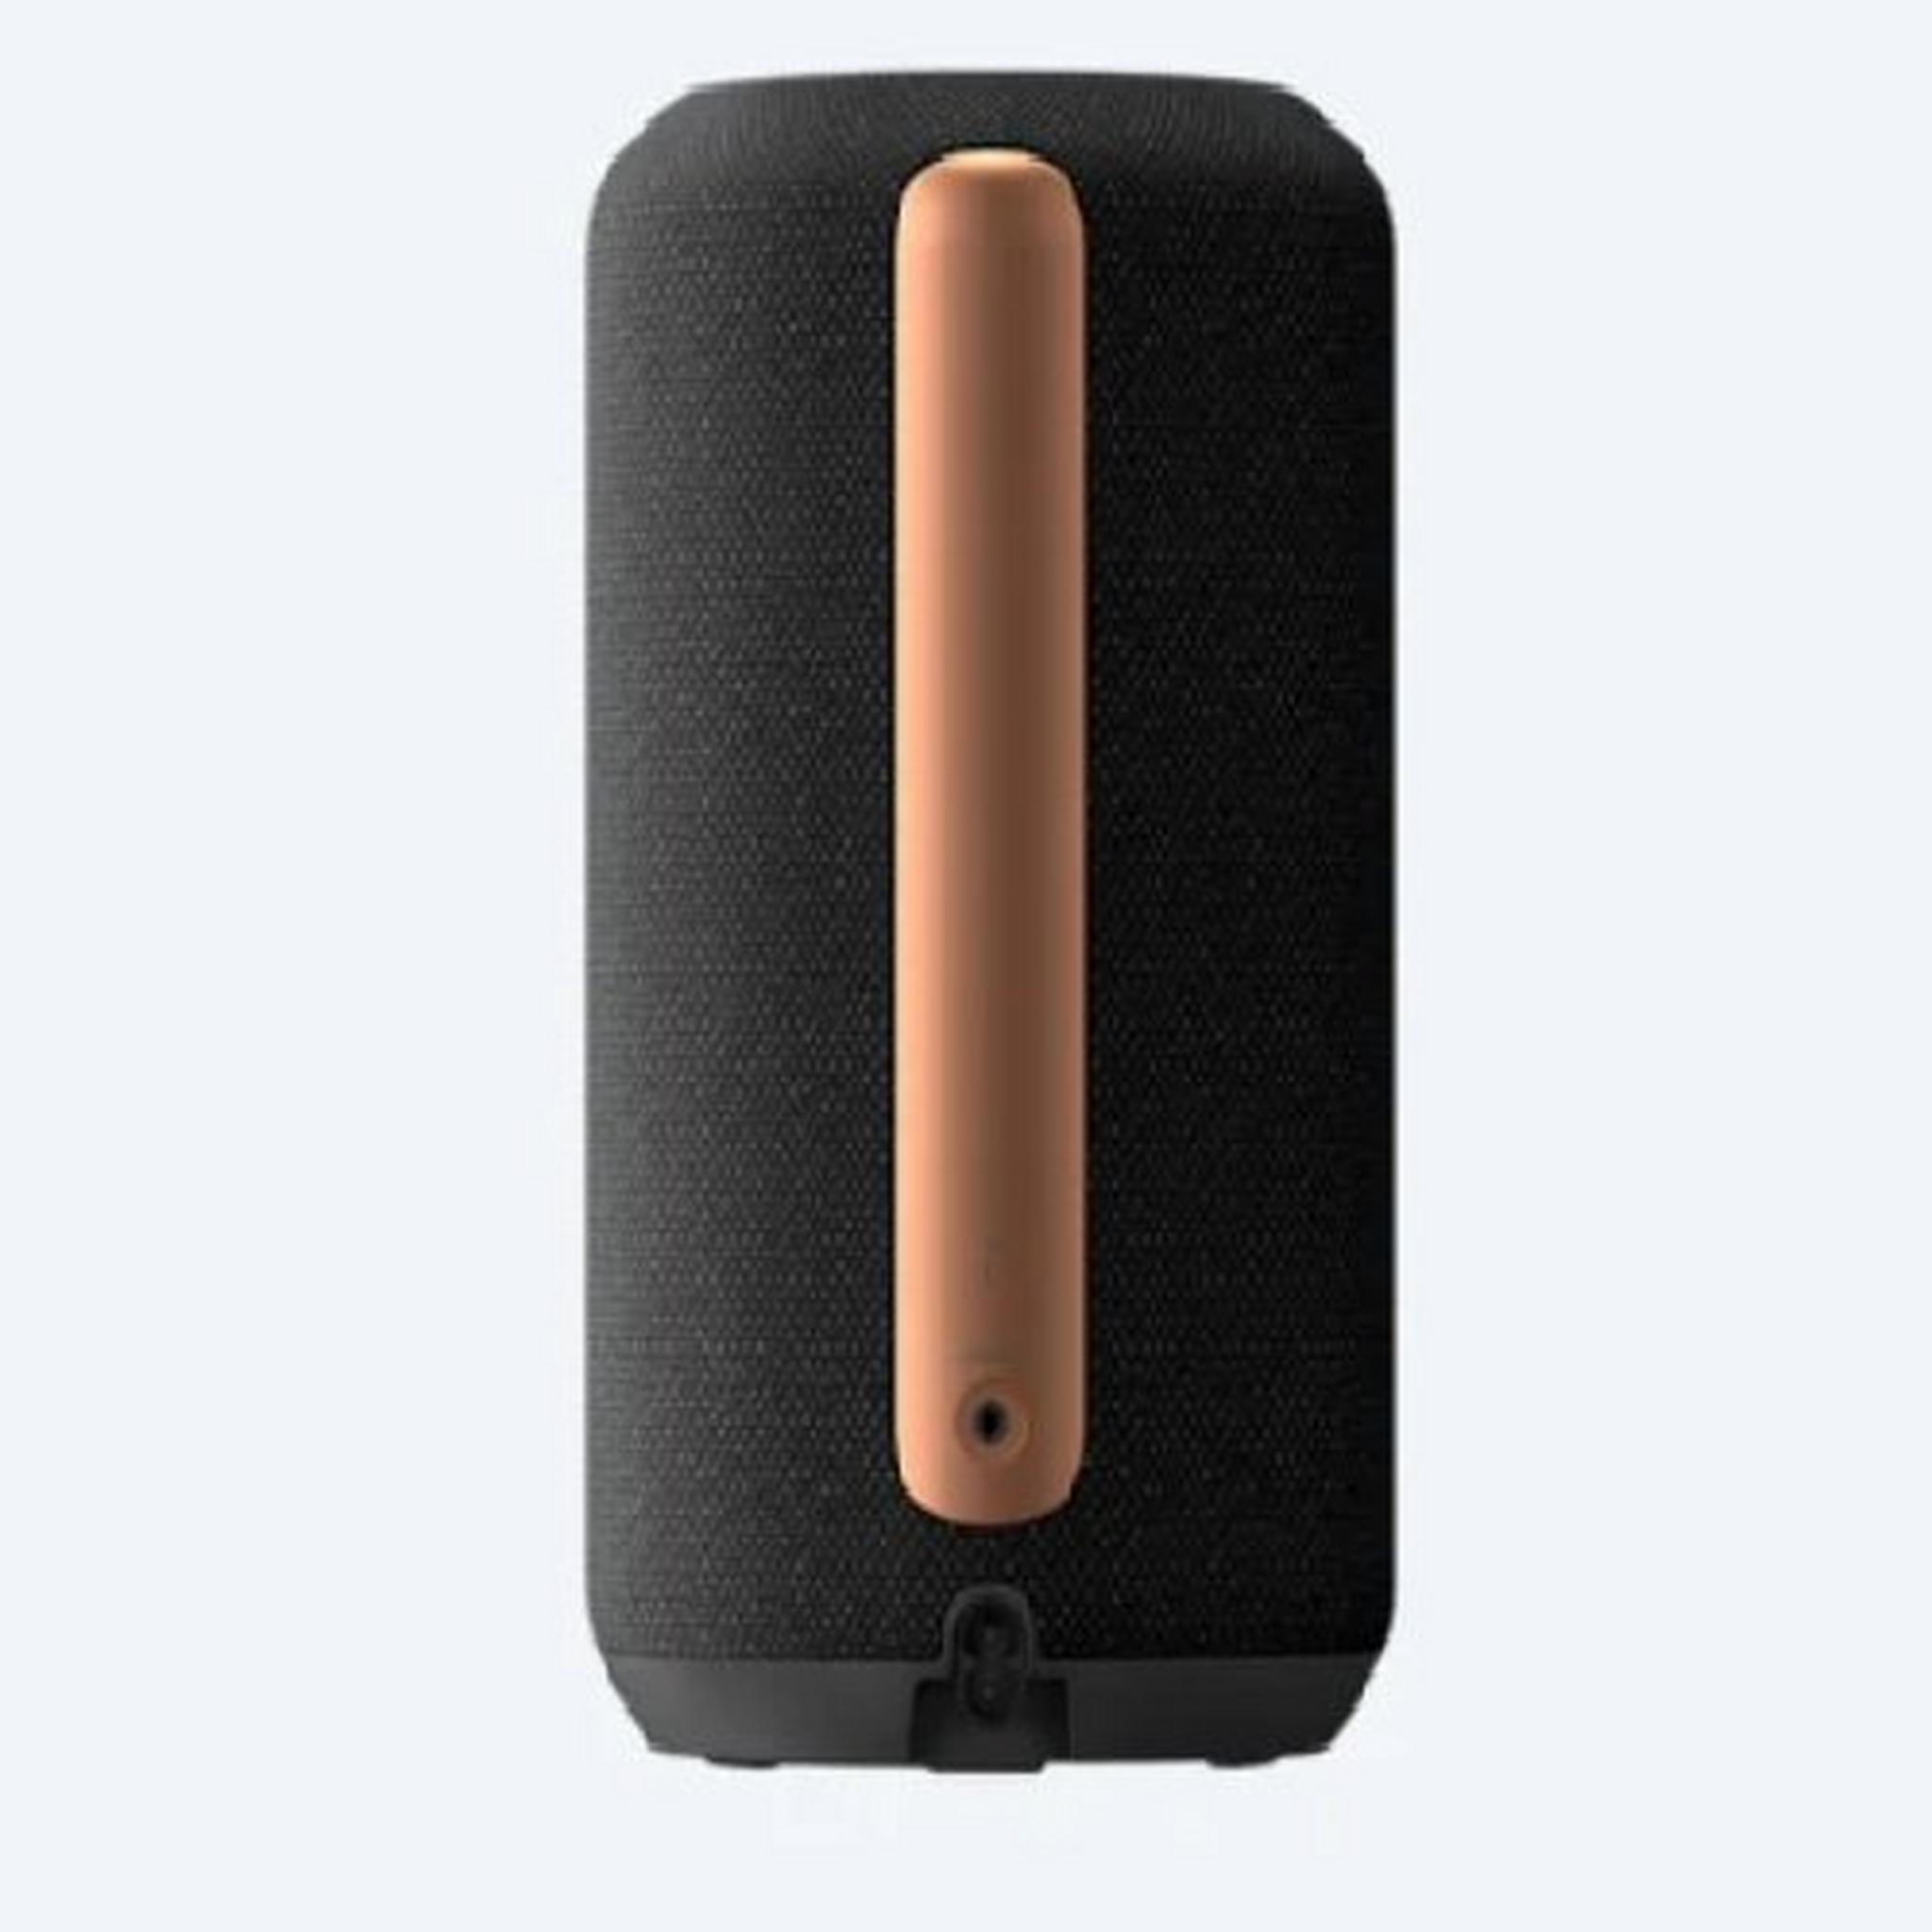 Sony Premium Wireless Speaker - Black (SRS-RA3000)